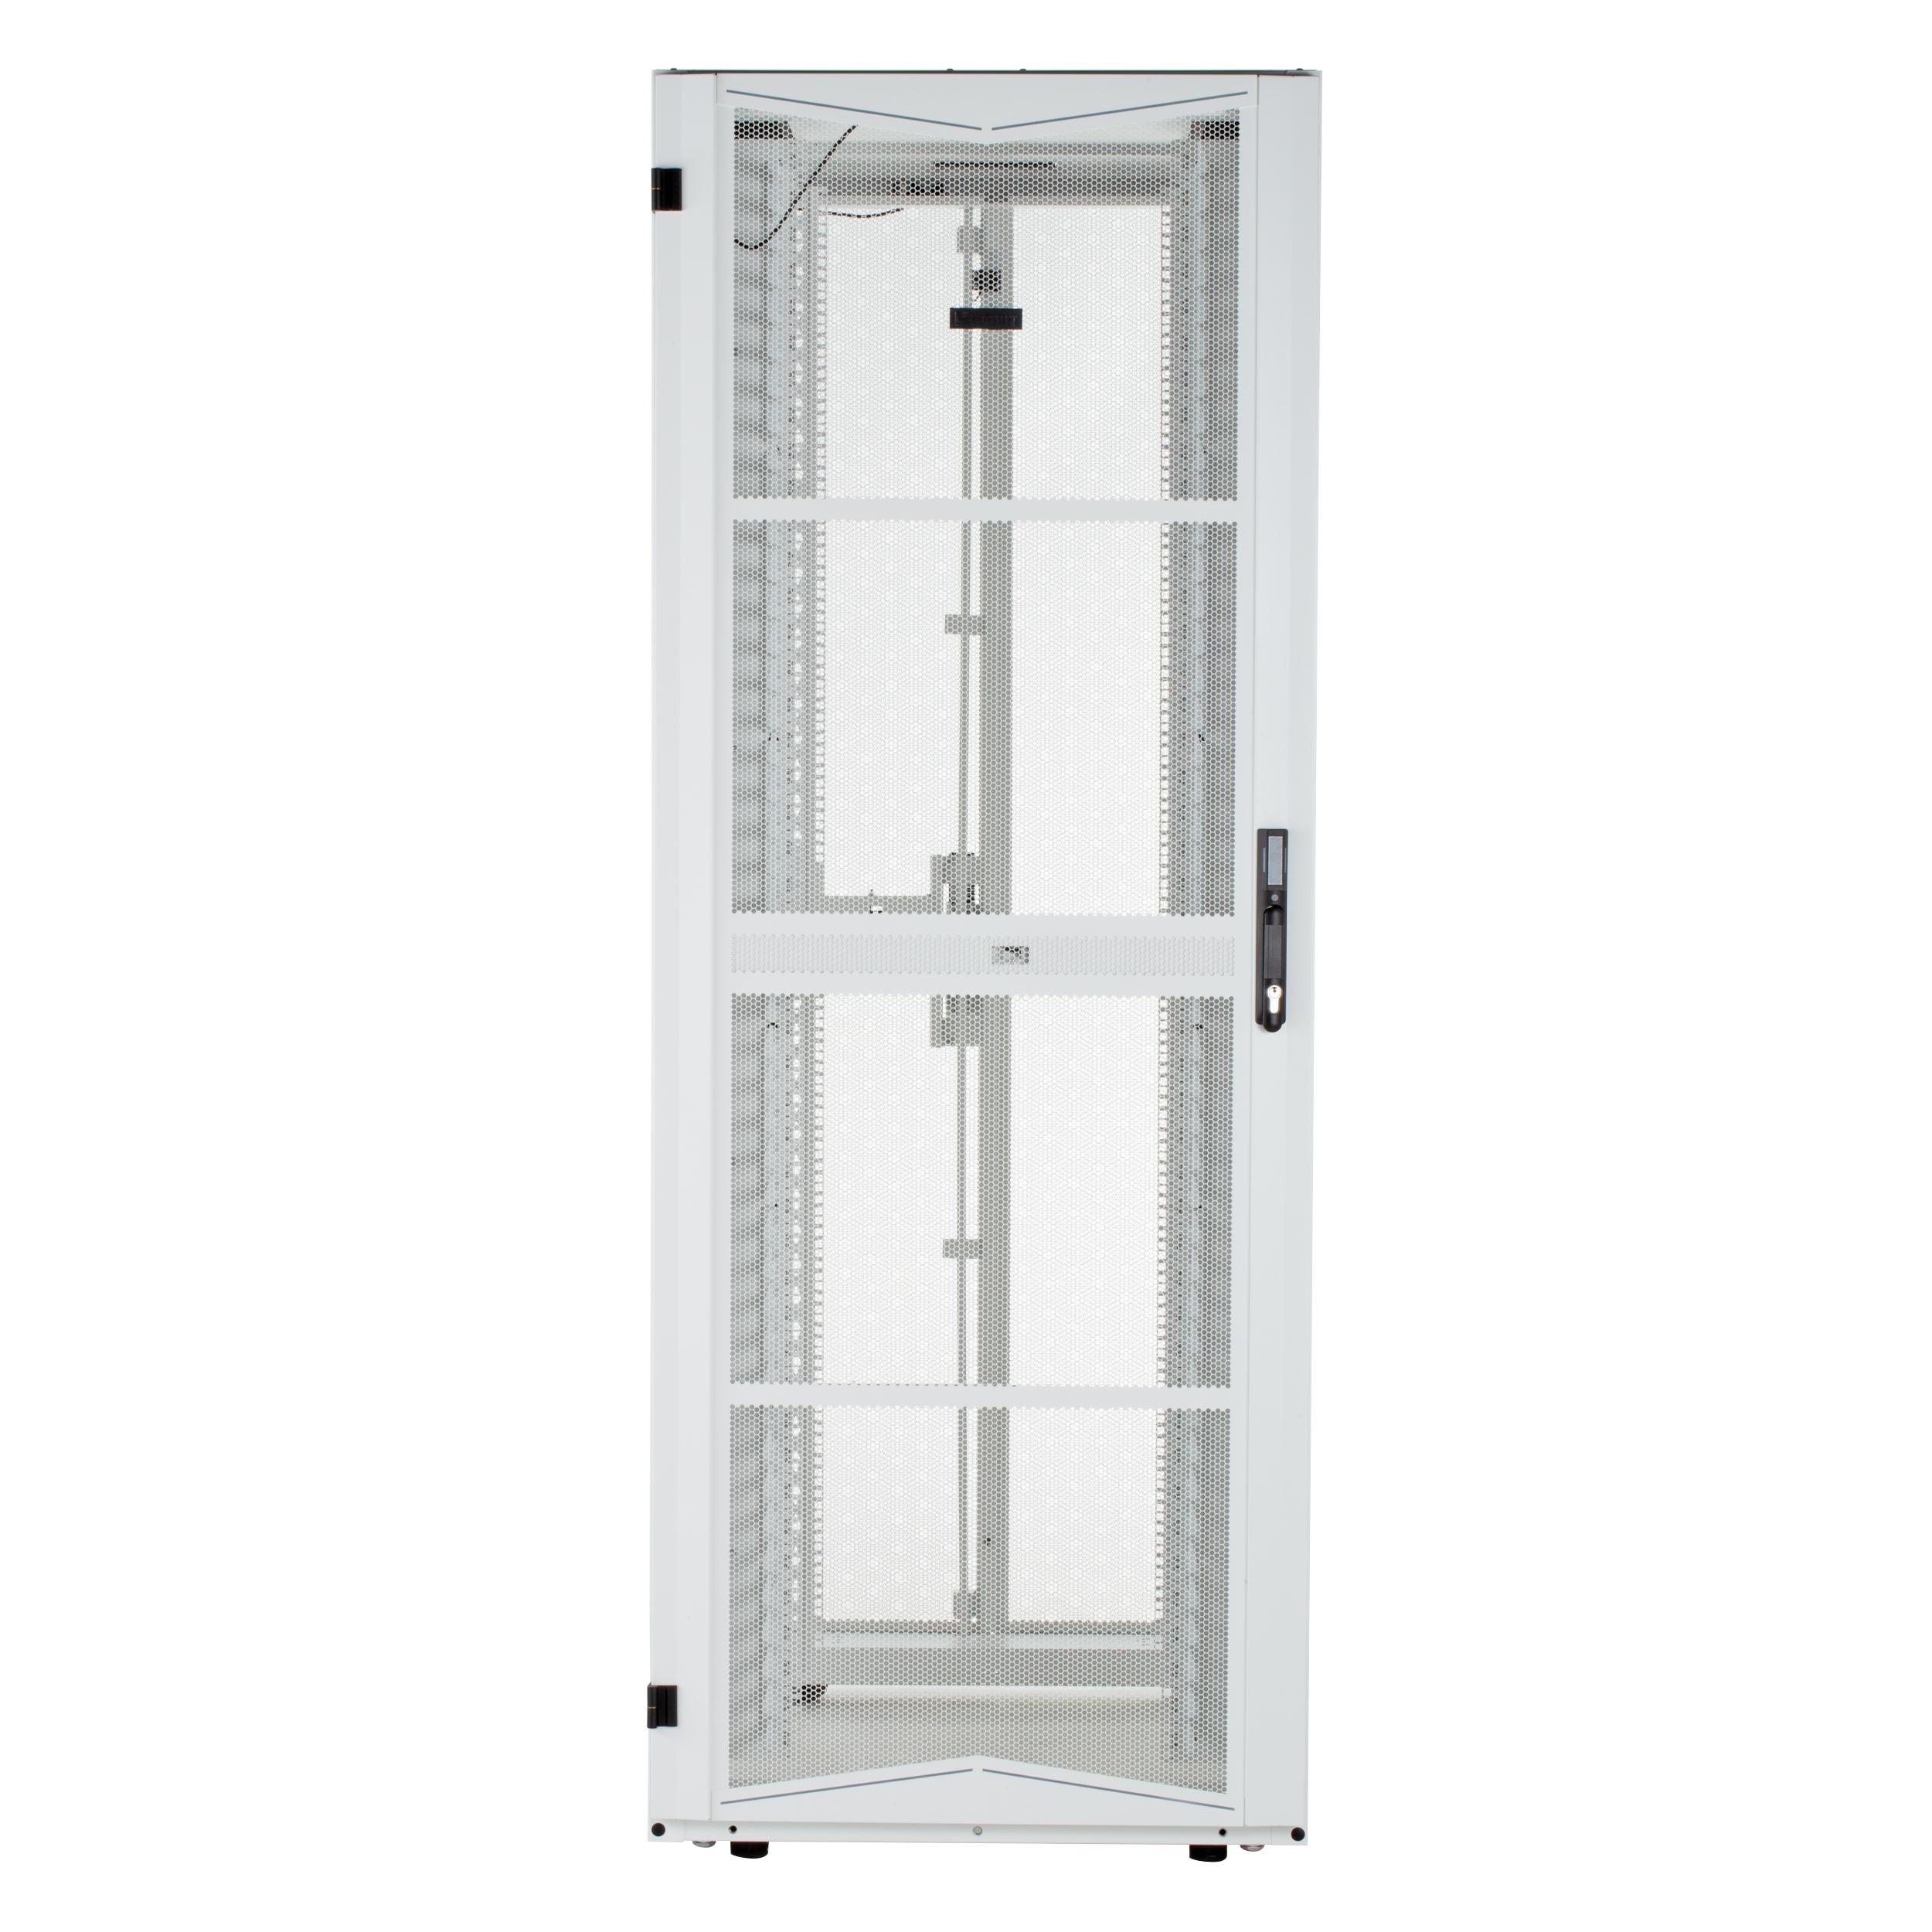 Panduit XG74822WS0001 FlexFusion Cabinet, 700mm x 48RU x 1200mm, White